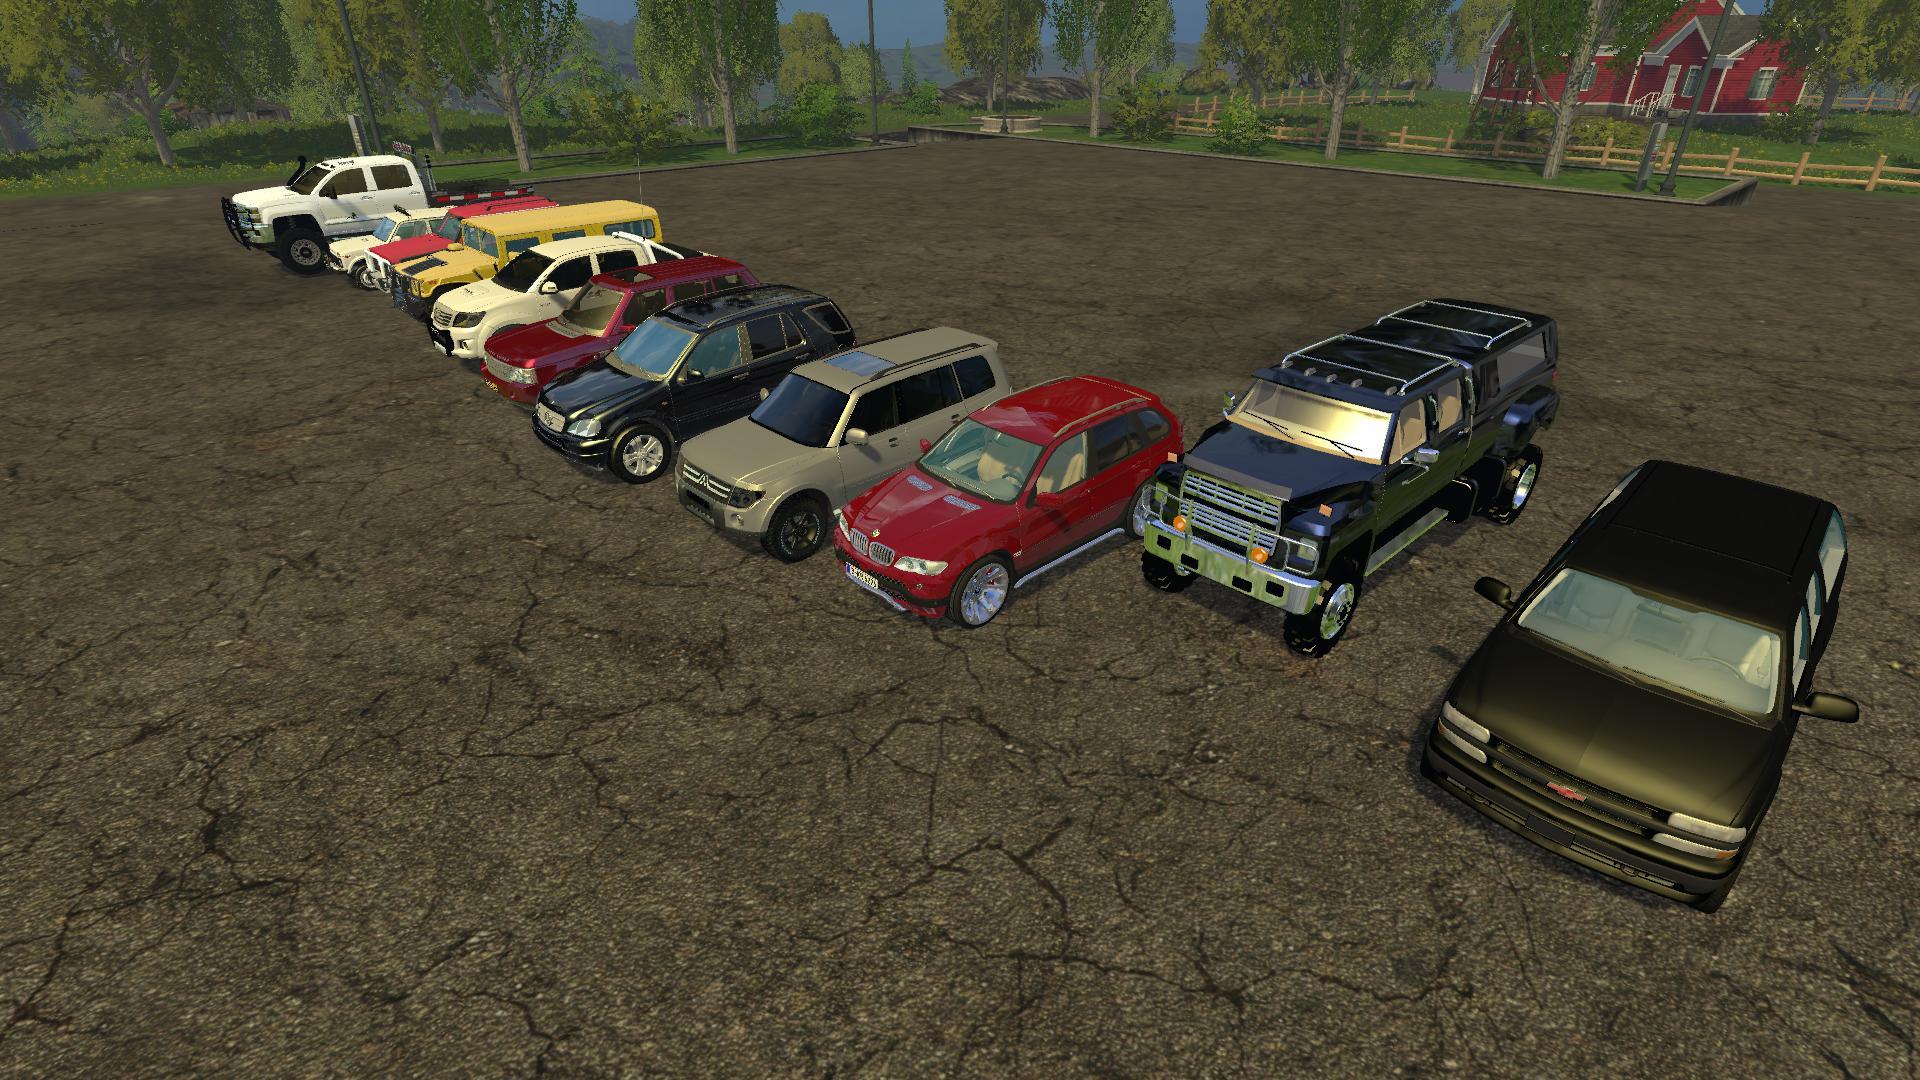 farming simulator 19 vehicles